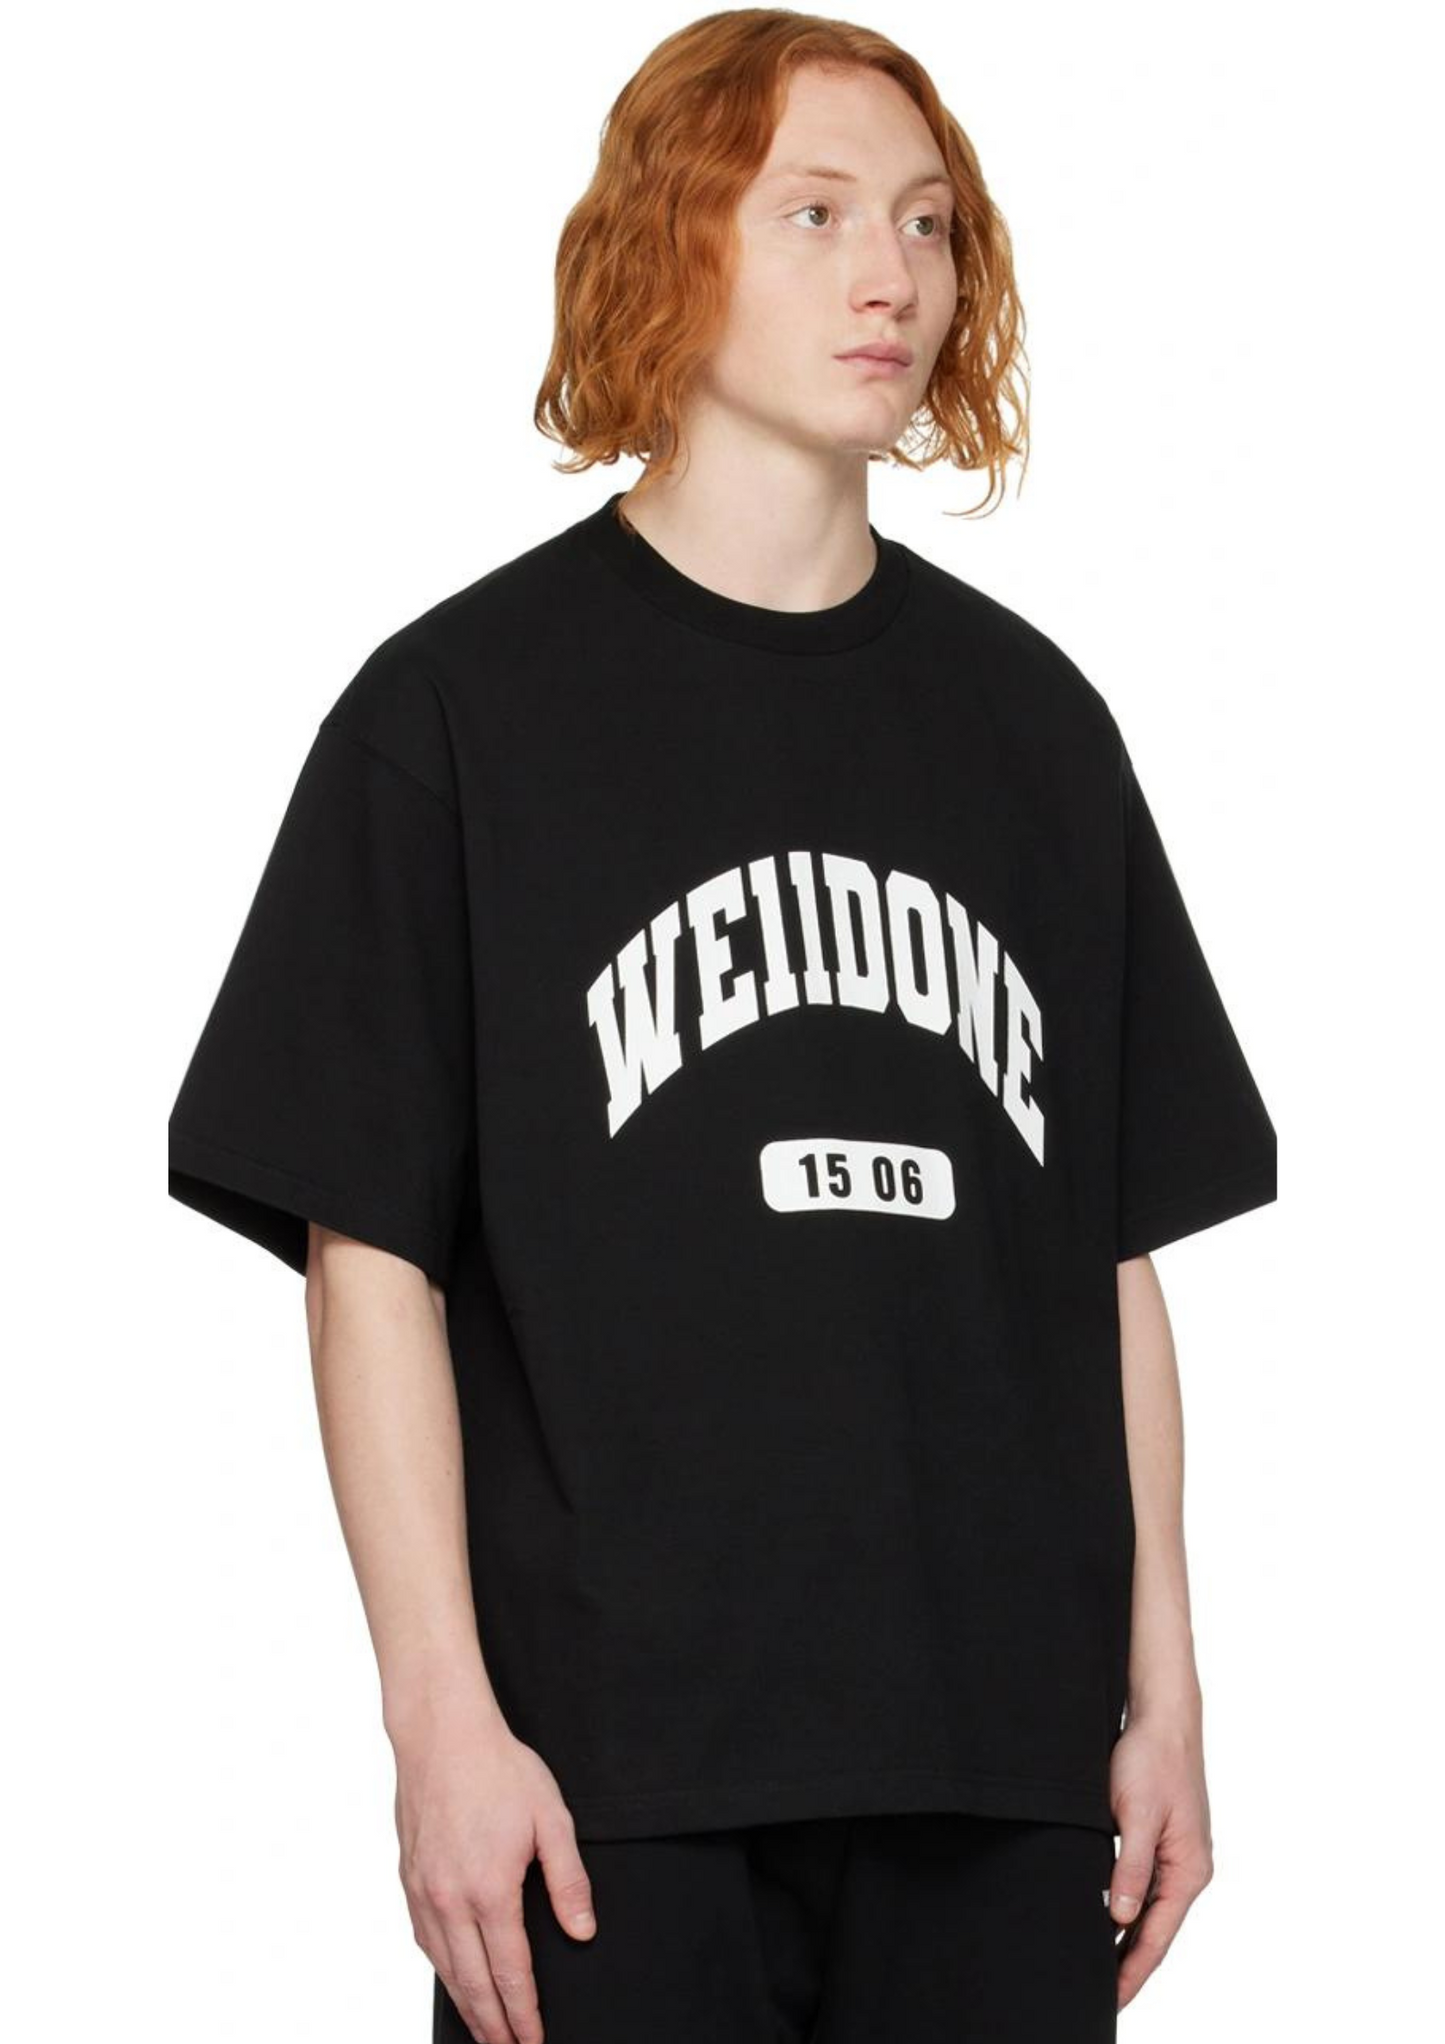 WE11DONE FW22 Printed T-Shirt (Black)